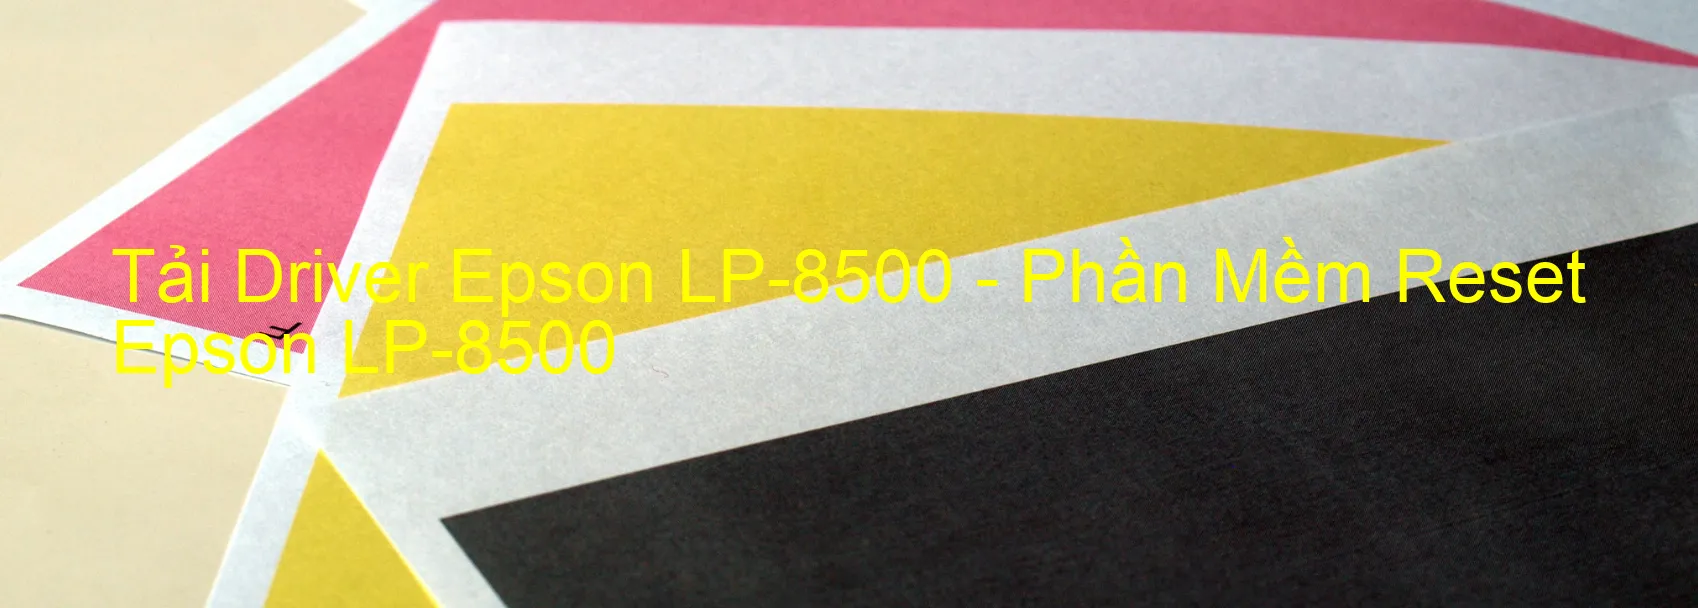 Driver Epson LP-8500, Phần Mềm Reset Epson LP-8500